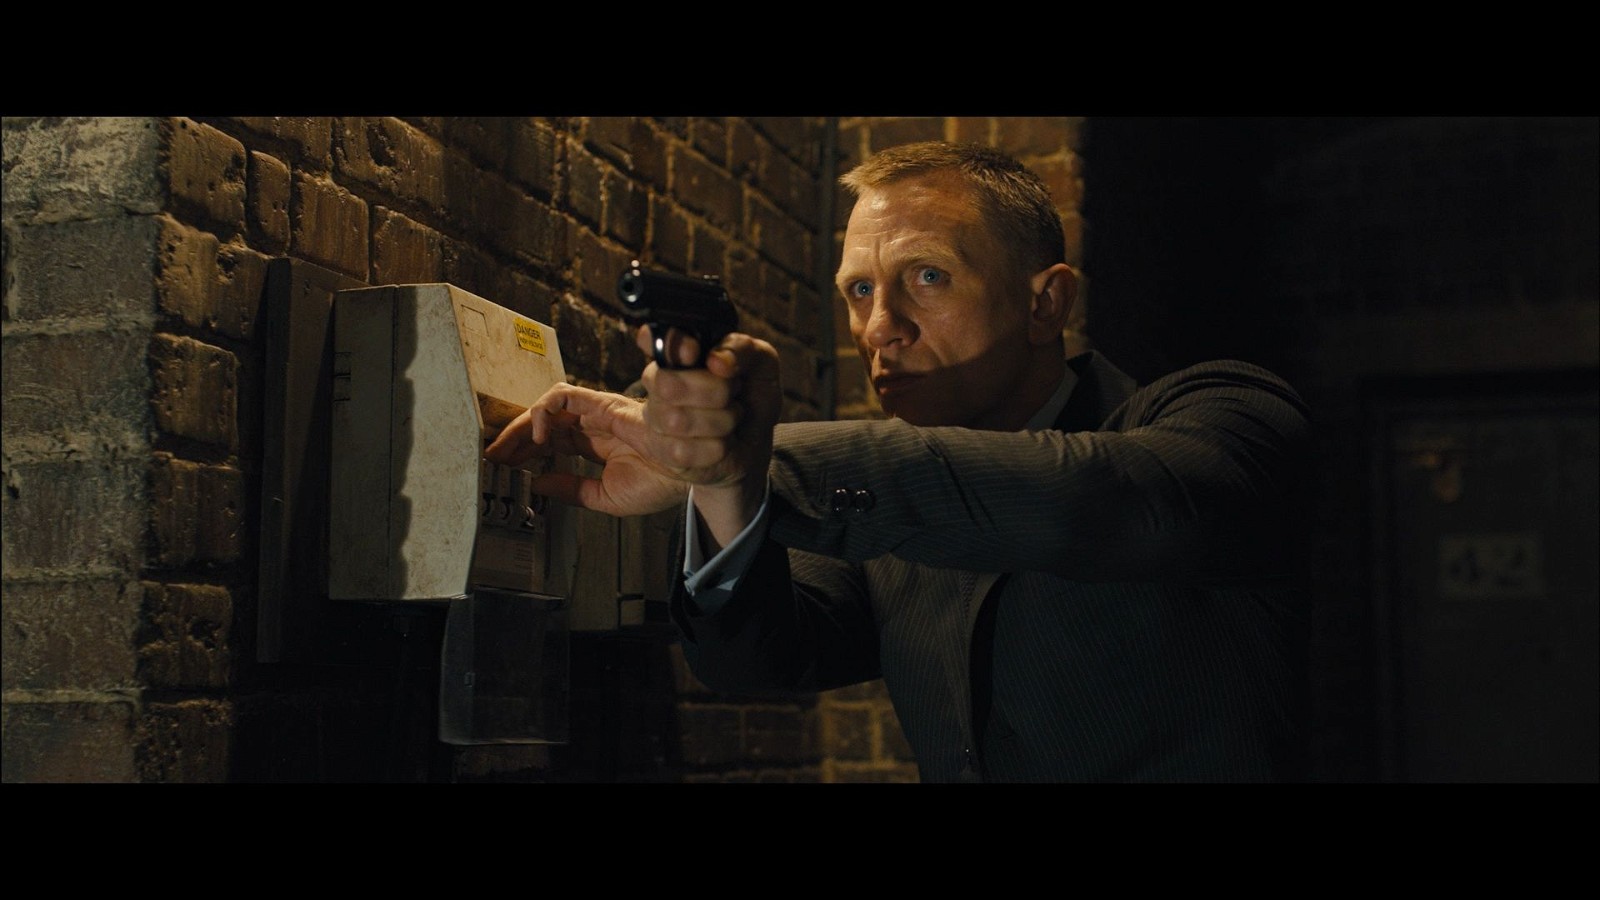 Daniel Craig's Skyfall has been hailed as one of the darkest Bond films yet